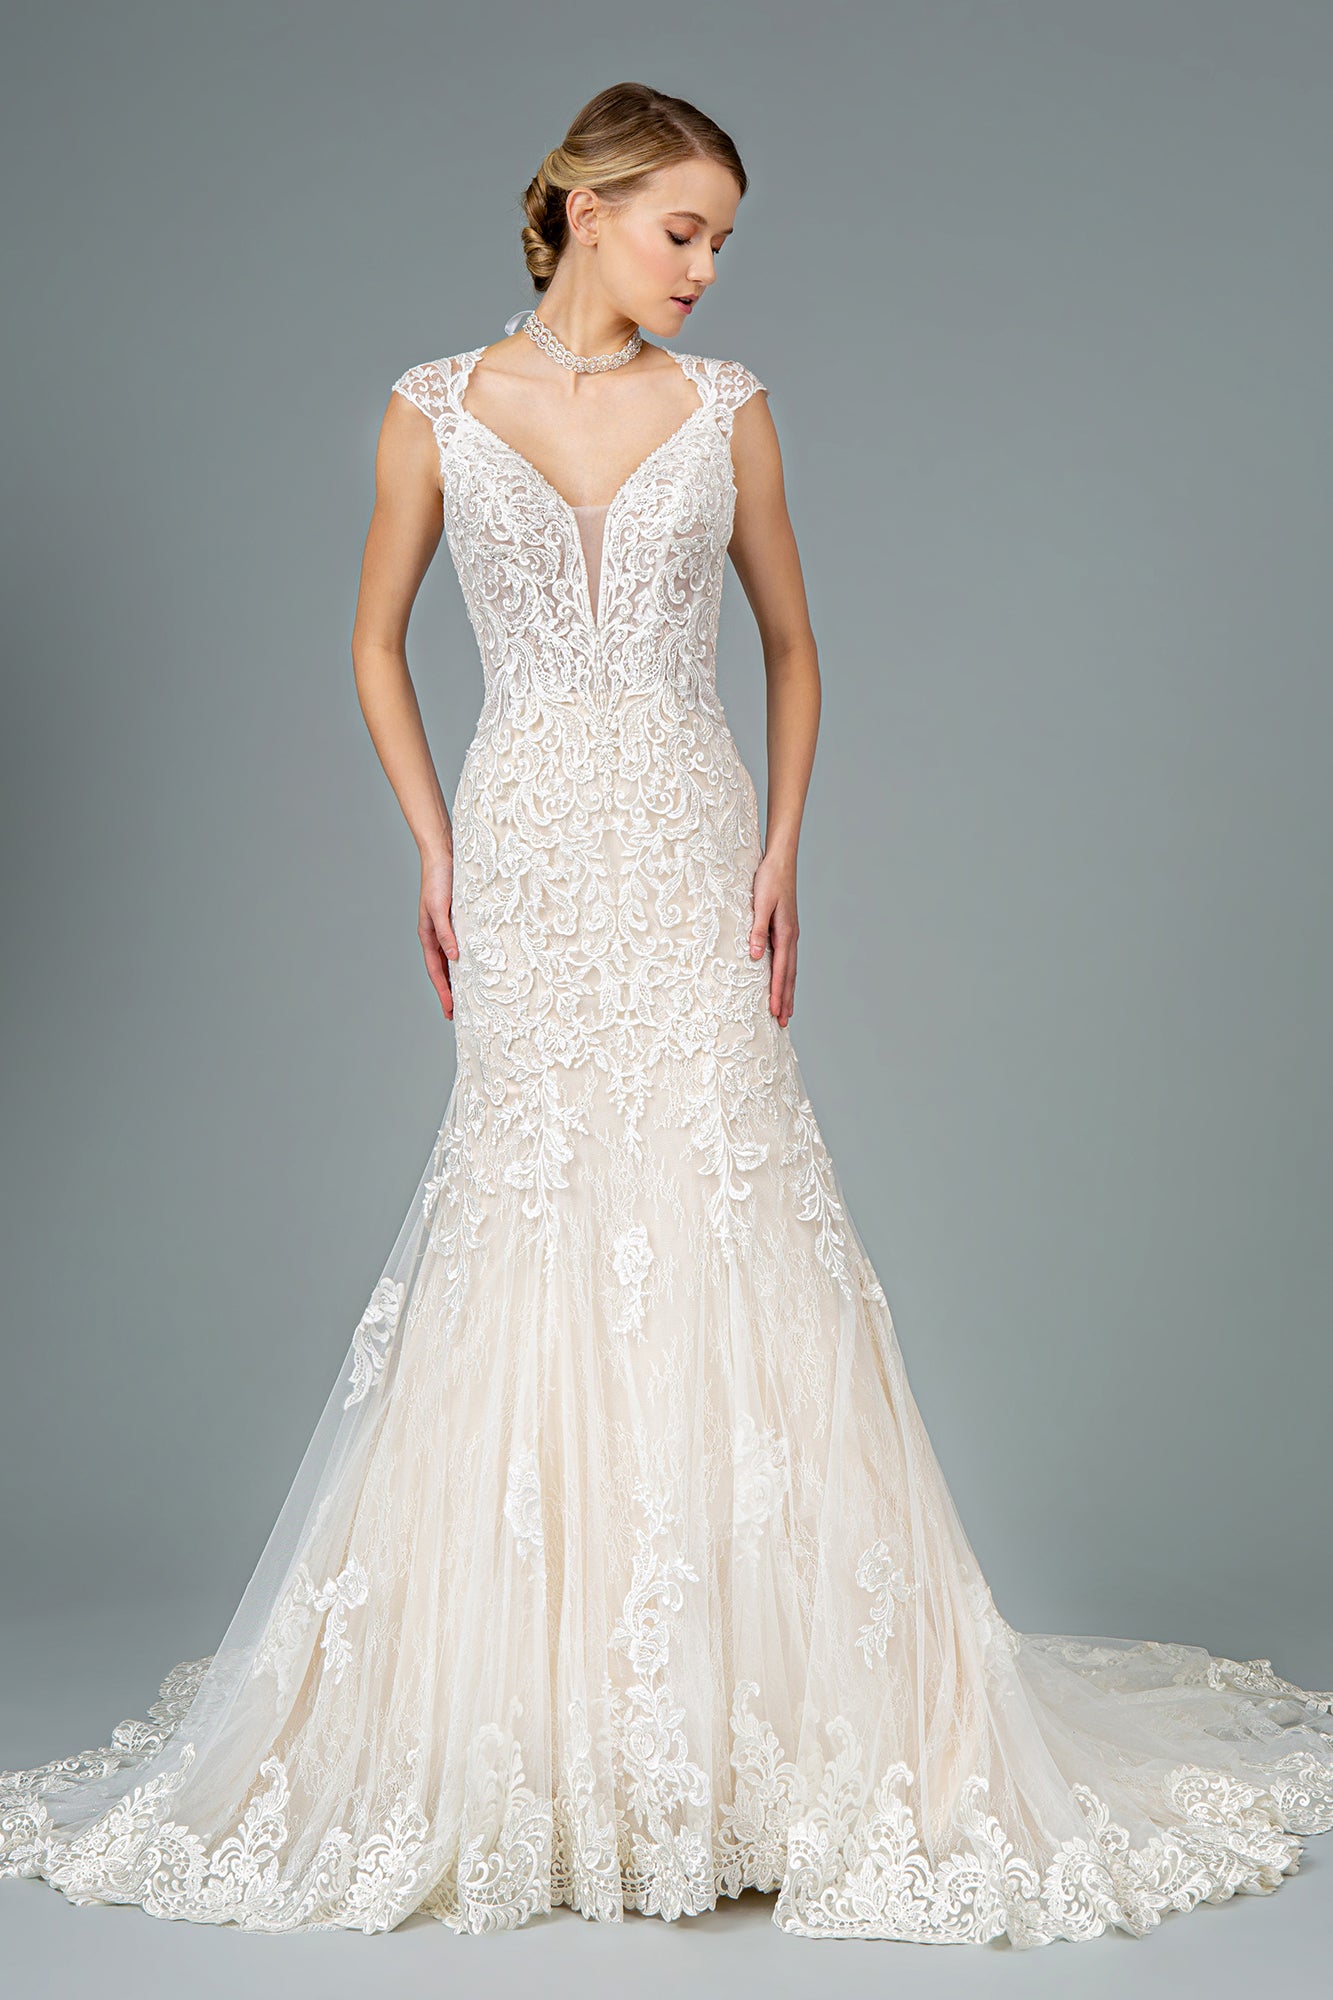 Lace Trumpet Bridal Wedding Gown 35426